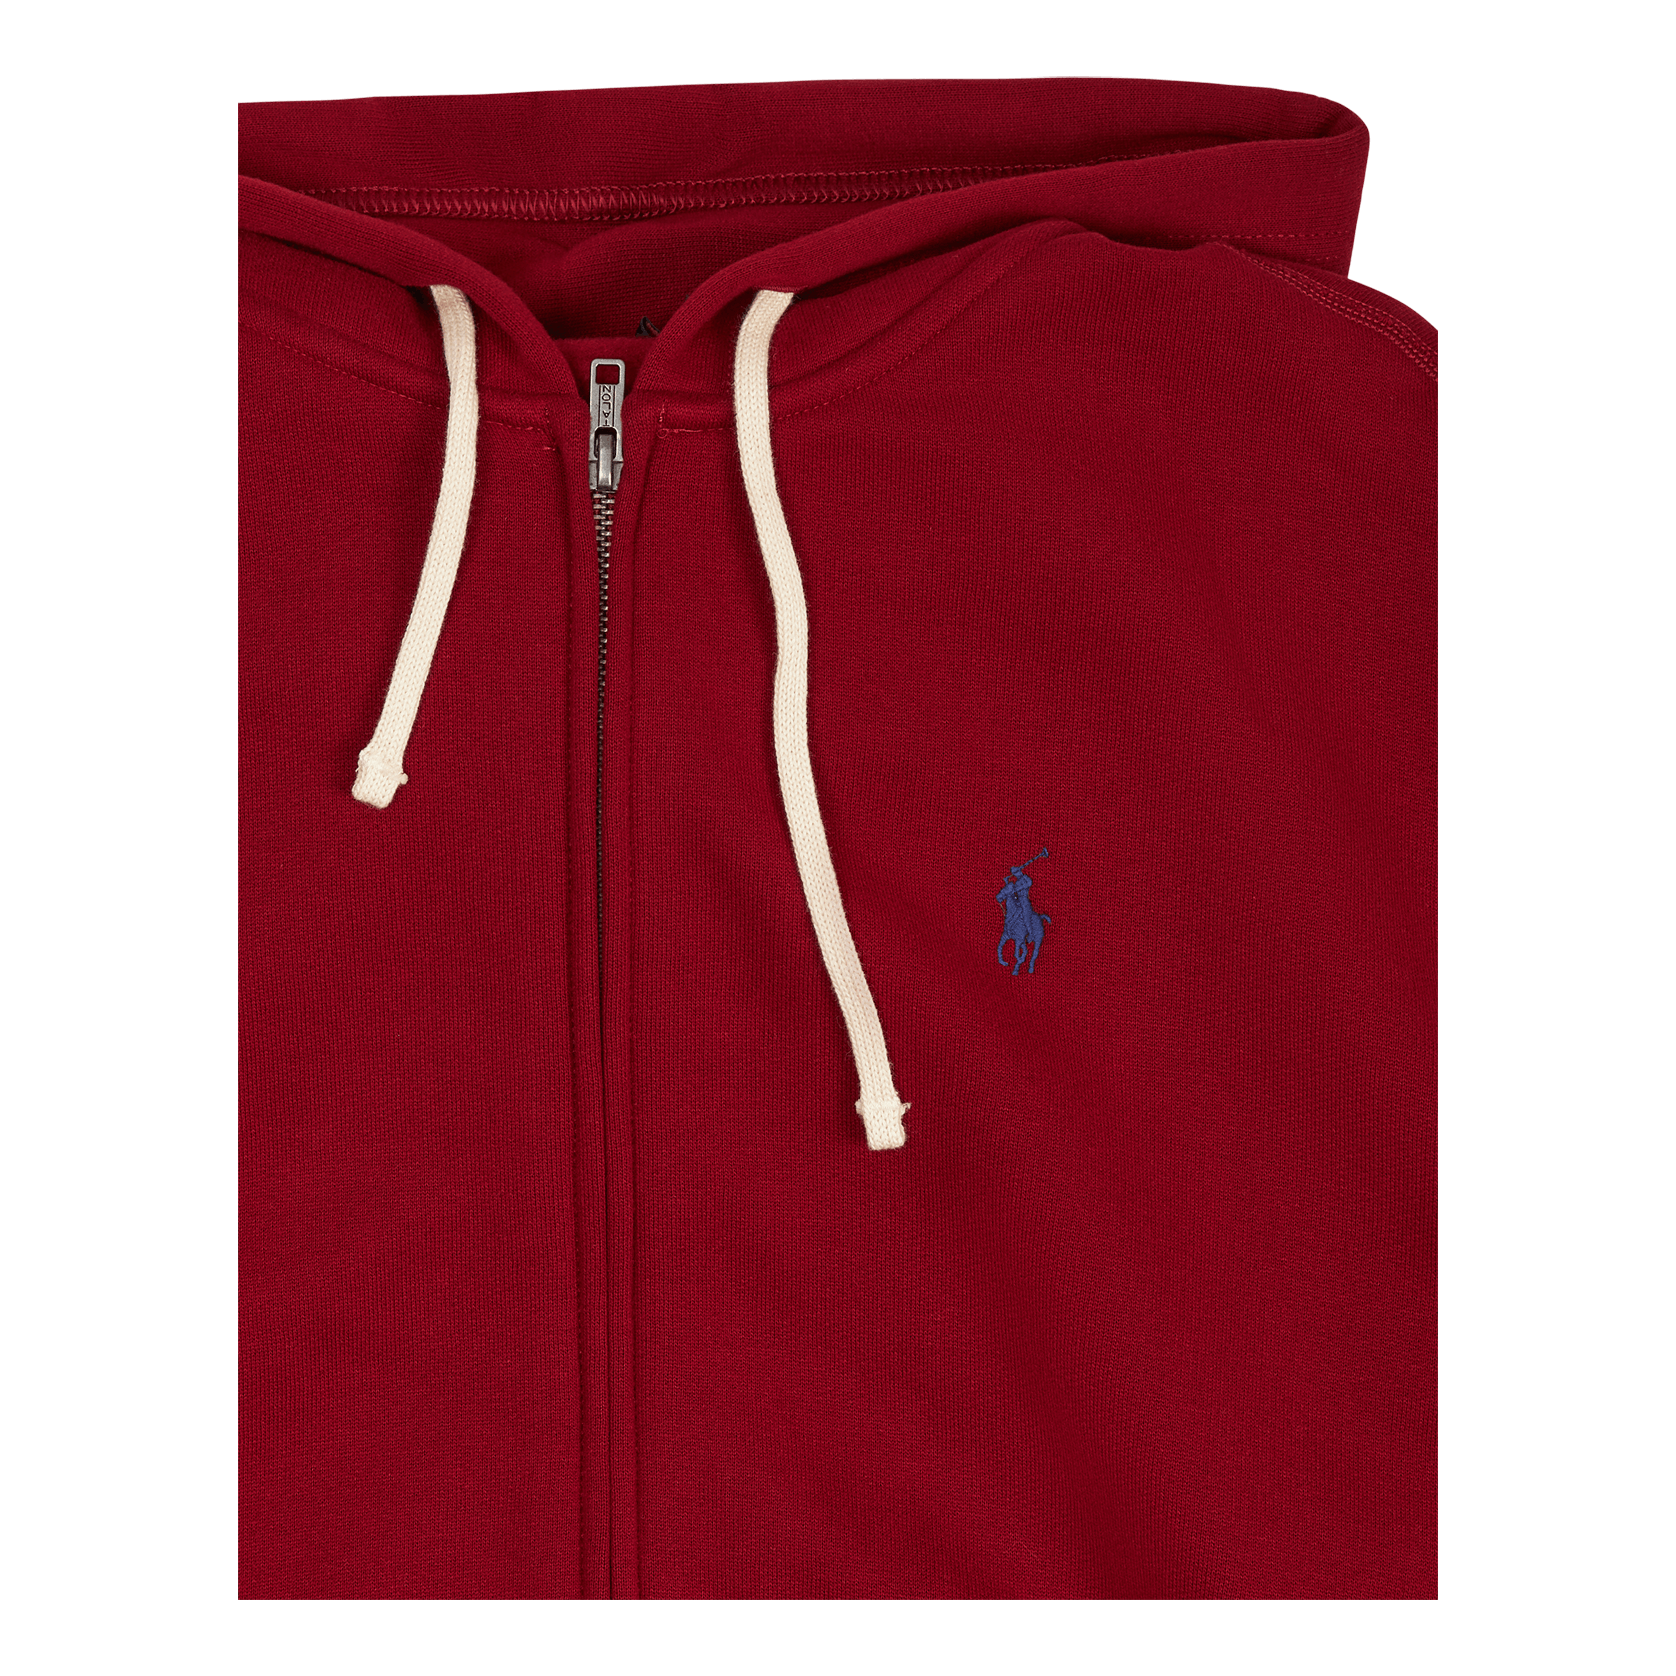 The RL Fleece Full-Zip Hoodie Holiday Red